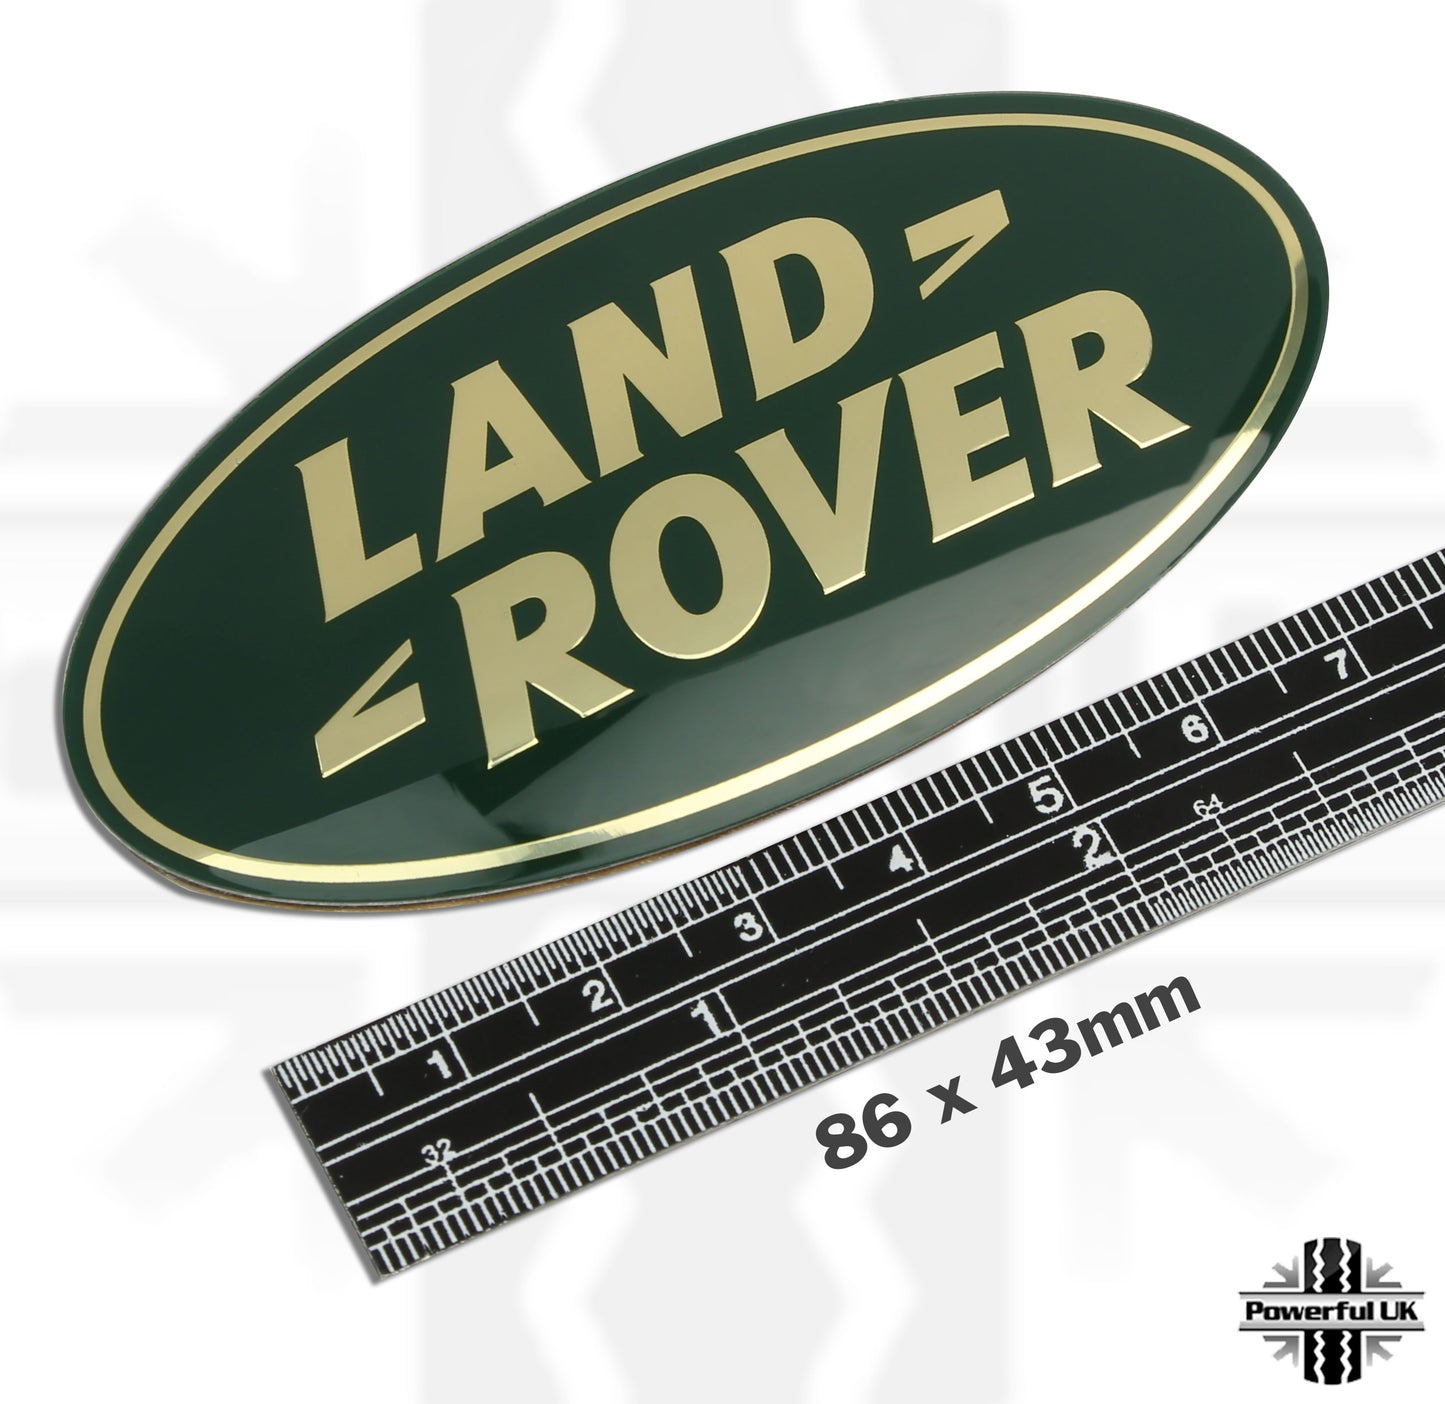 Genuine Front Grille Badge - Green & Gold - for Range Rover L322